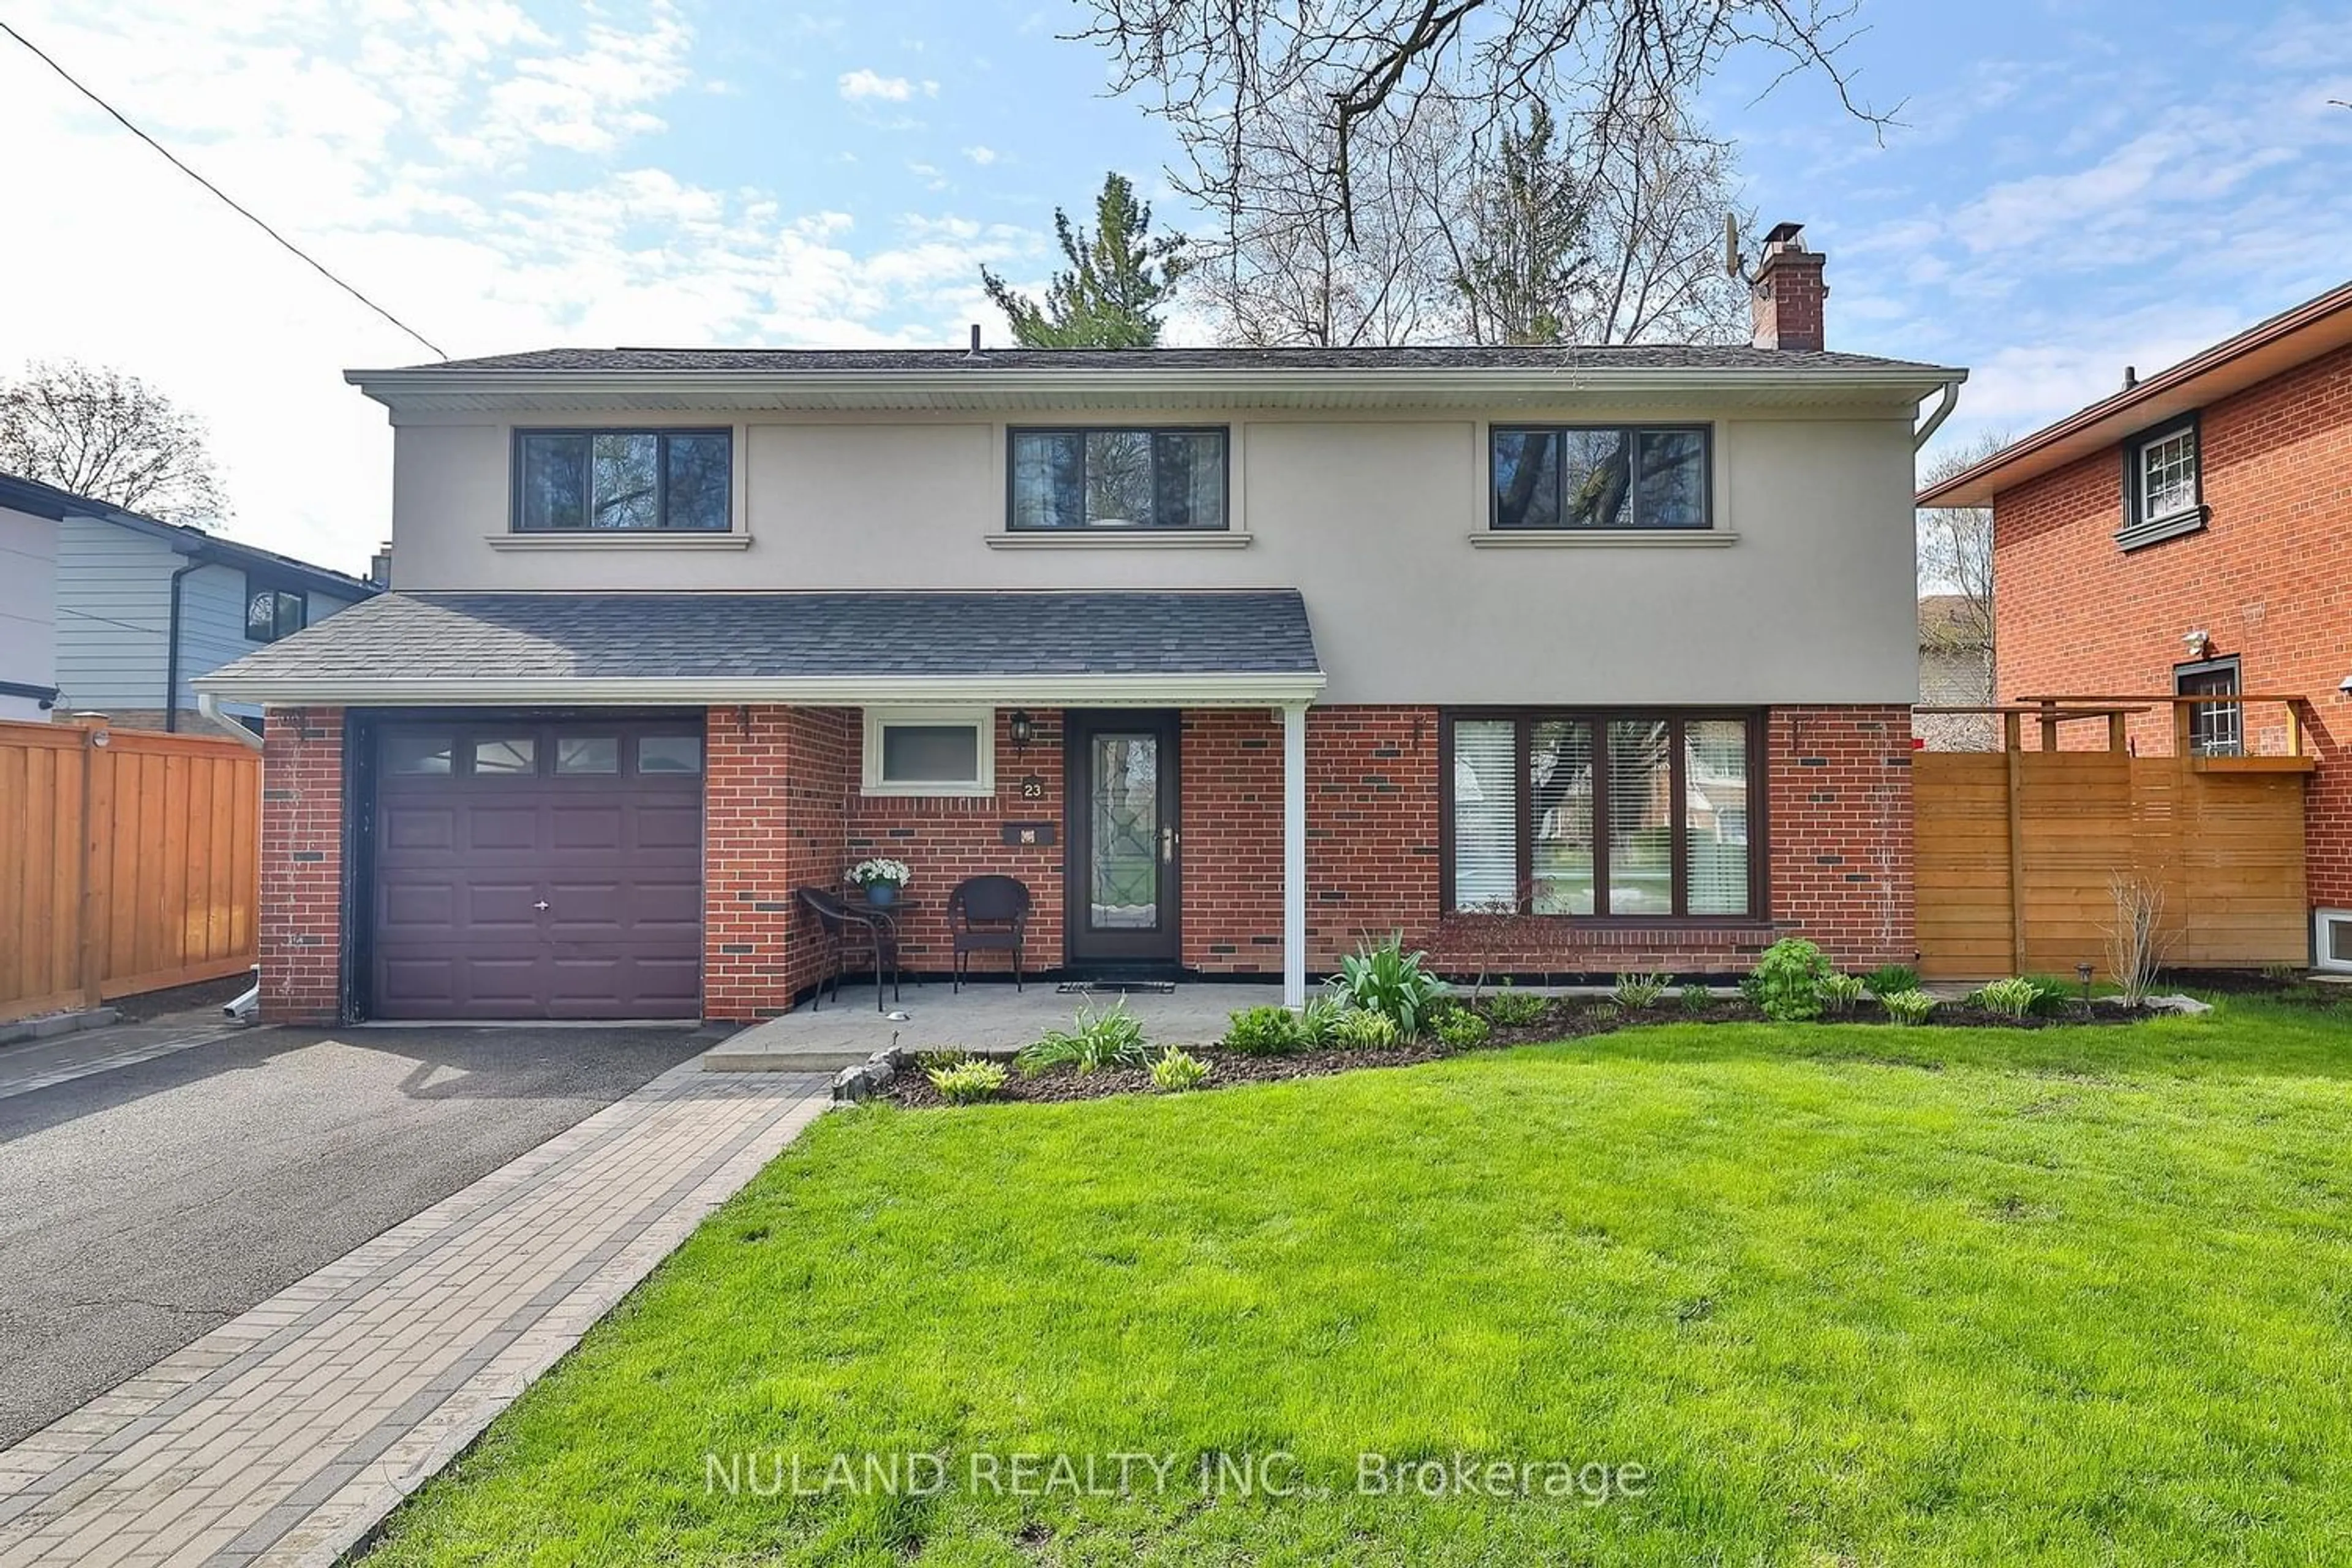 Home with brick exterior material for 23 Glos Rd, Toronto Ontario M9C 3A1